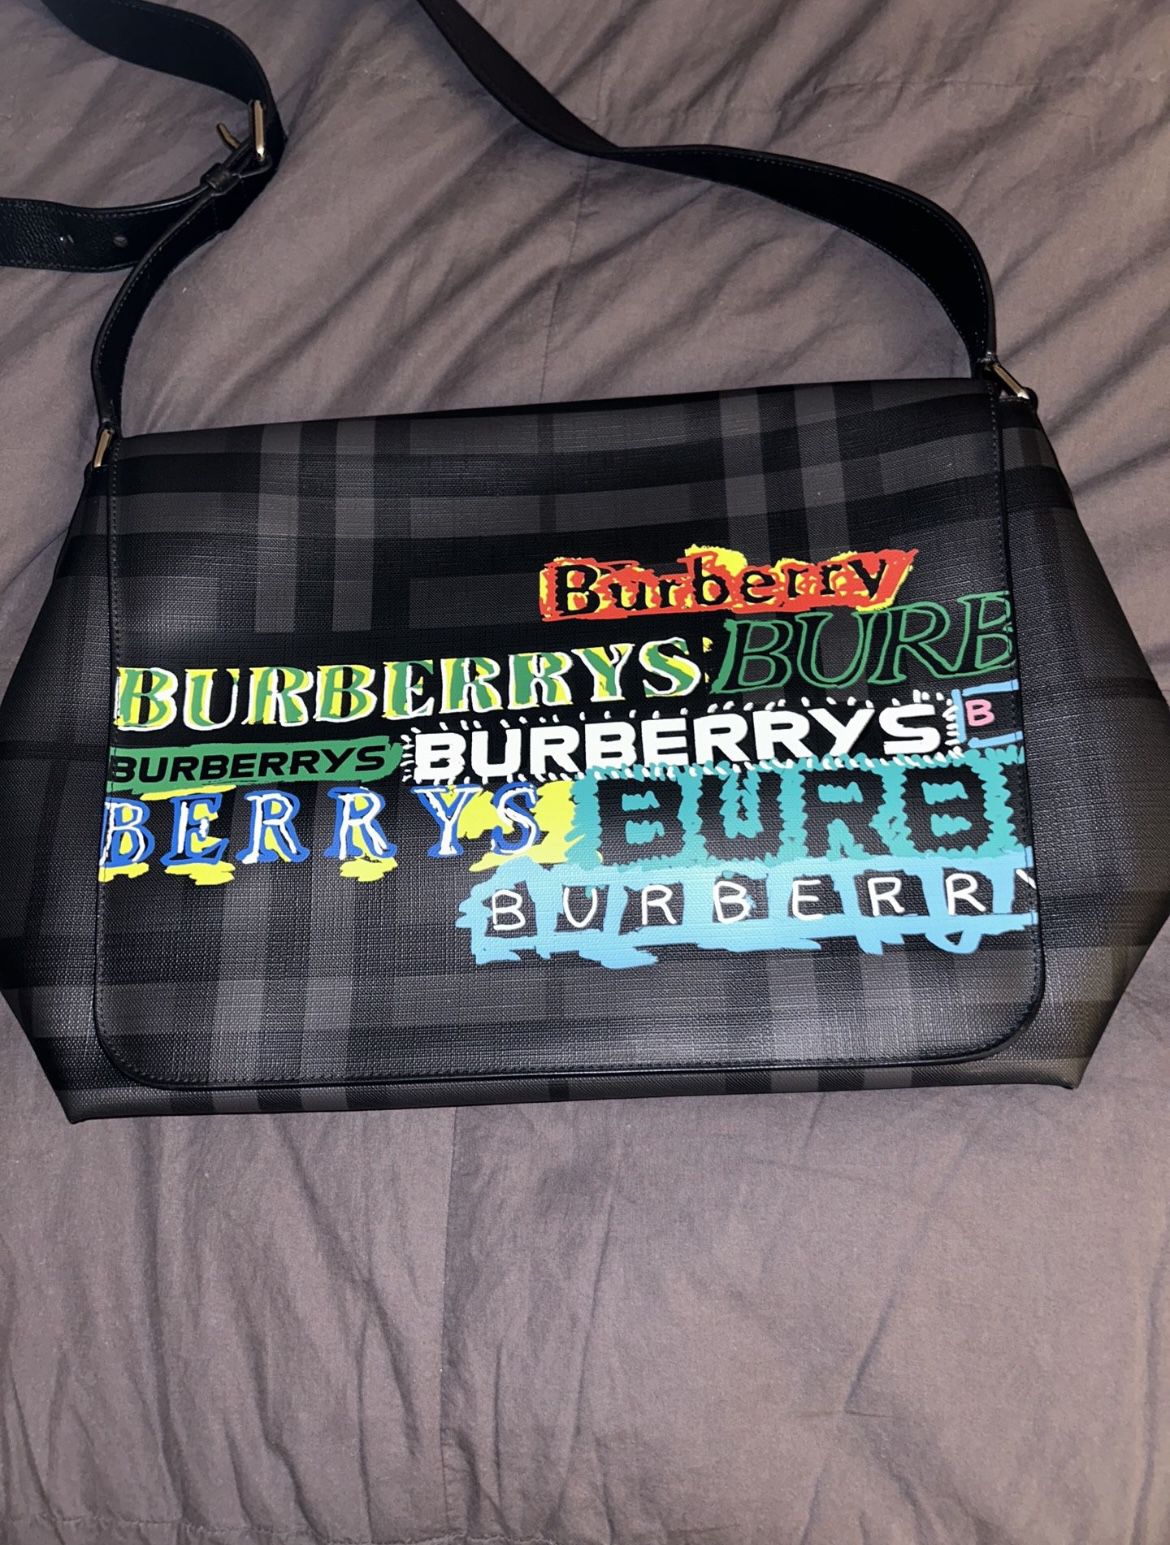 Burberry man purse 